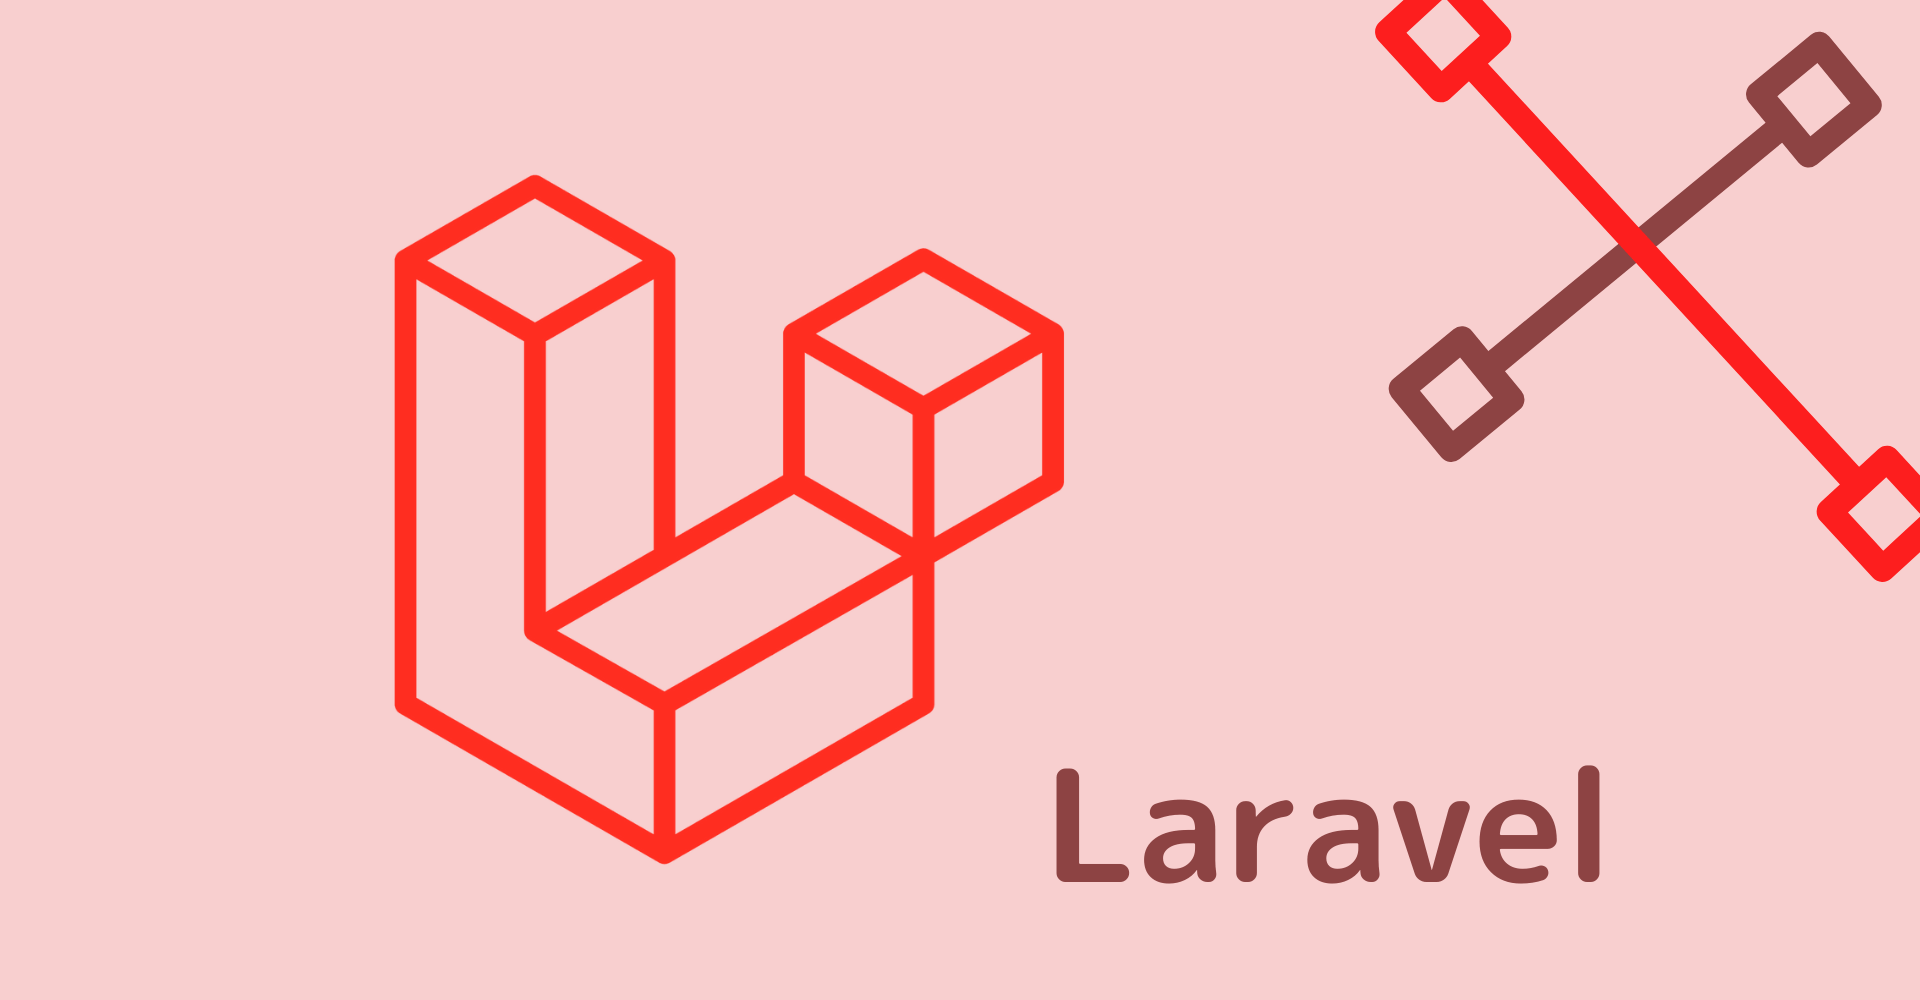 【Laravel】ミドルウェアとは？使い方やメリット、グローバル登録の方法